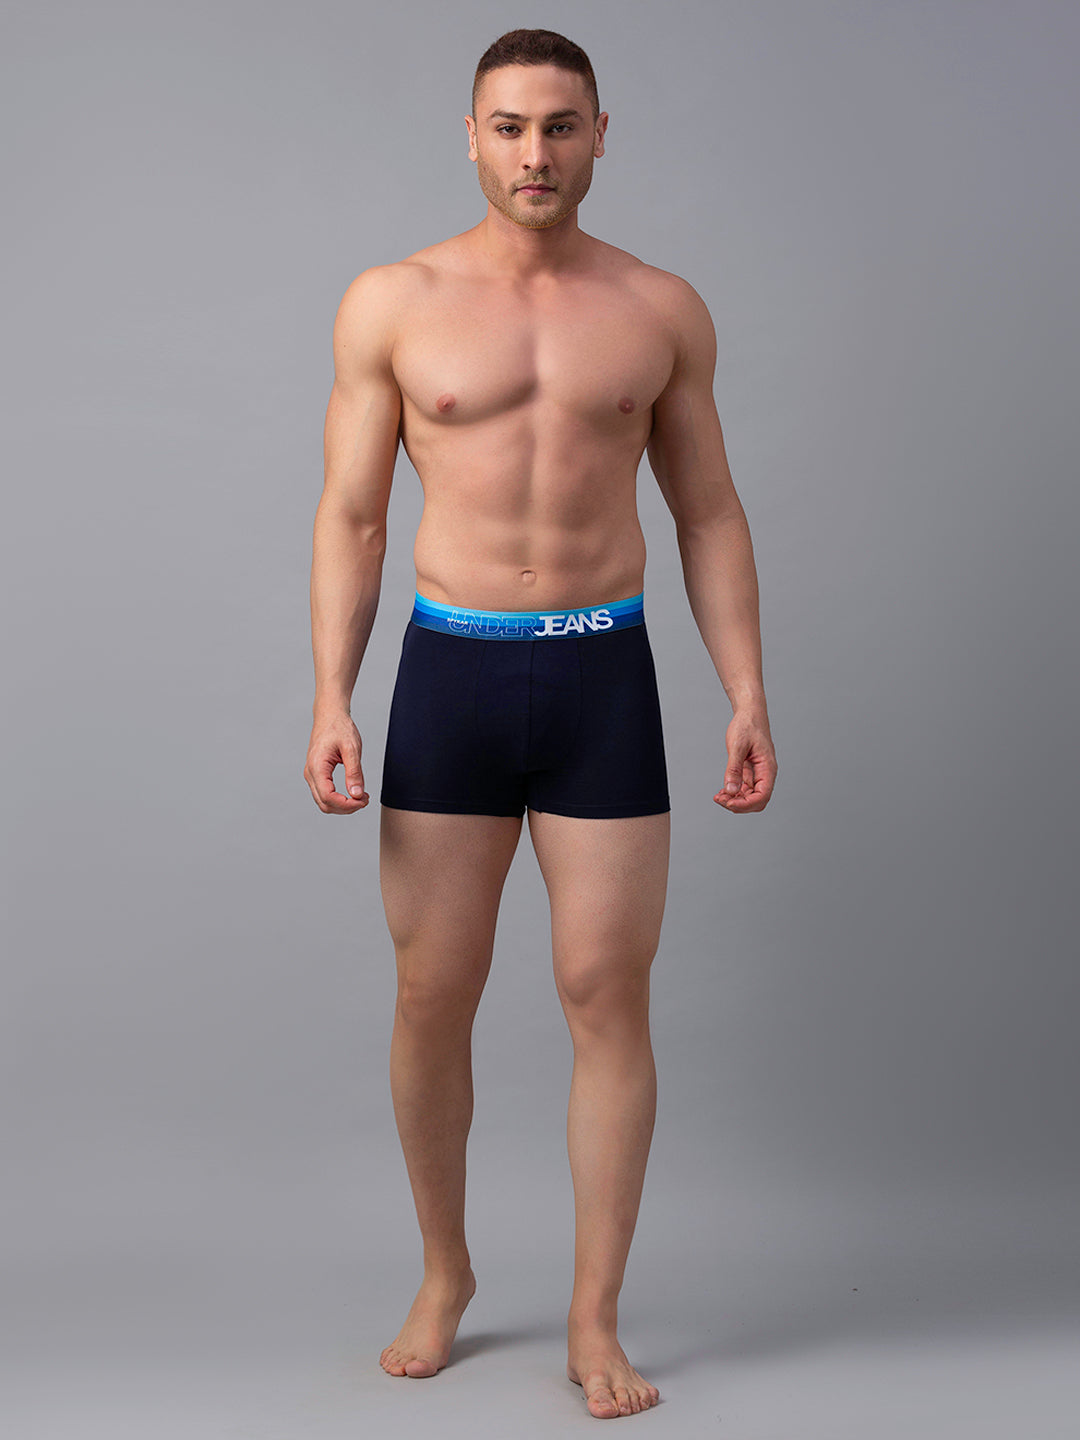 Men Premium Navy-Blue Cotton Blend Trunk- UnderJeans by Spykar